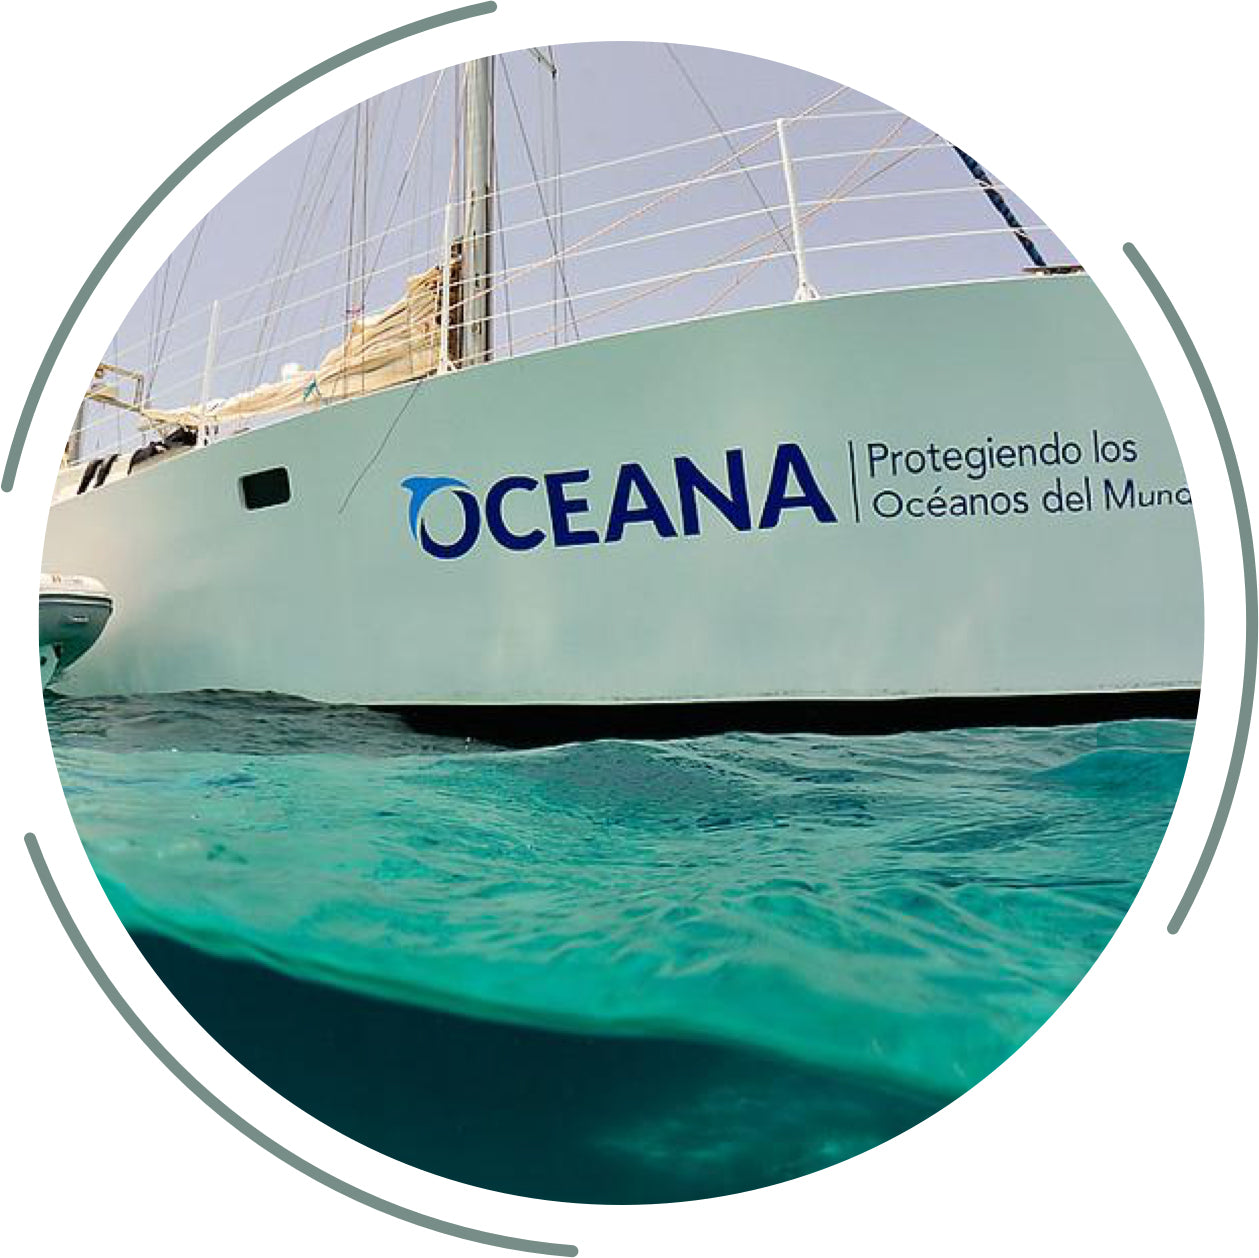 Oceana boat at sea